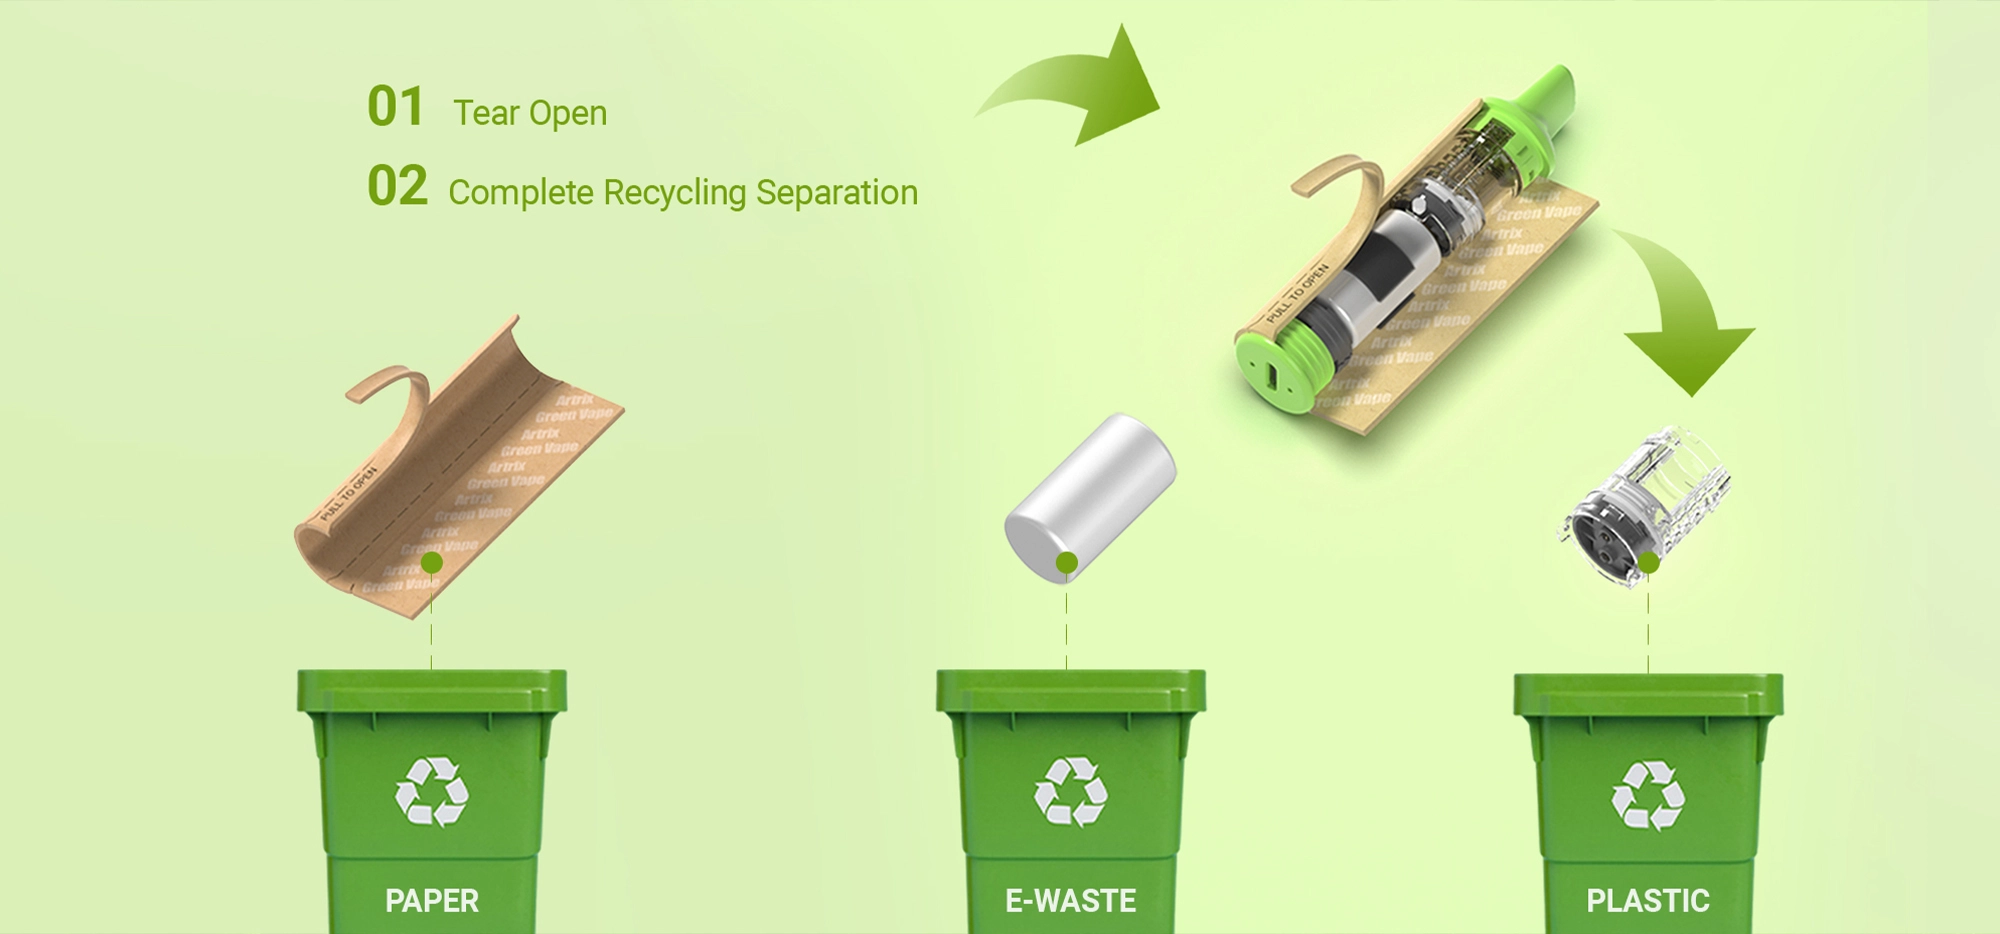 100% Recyclability & Convenience